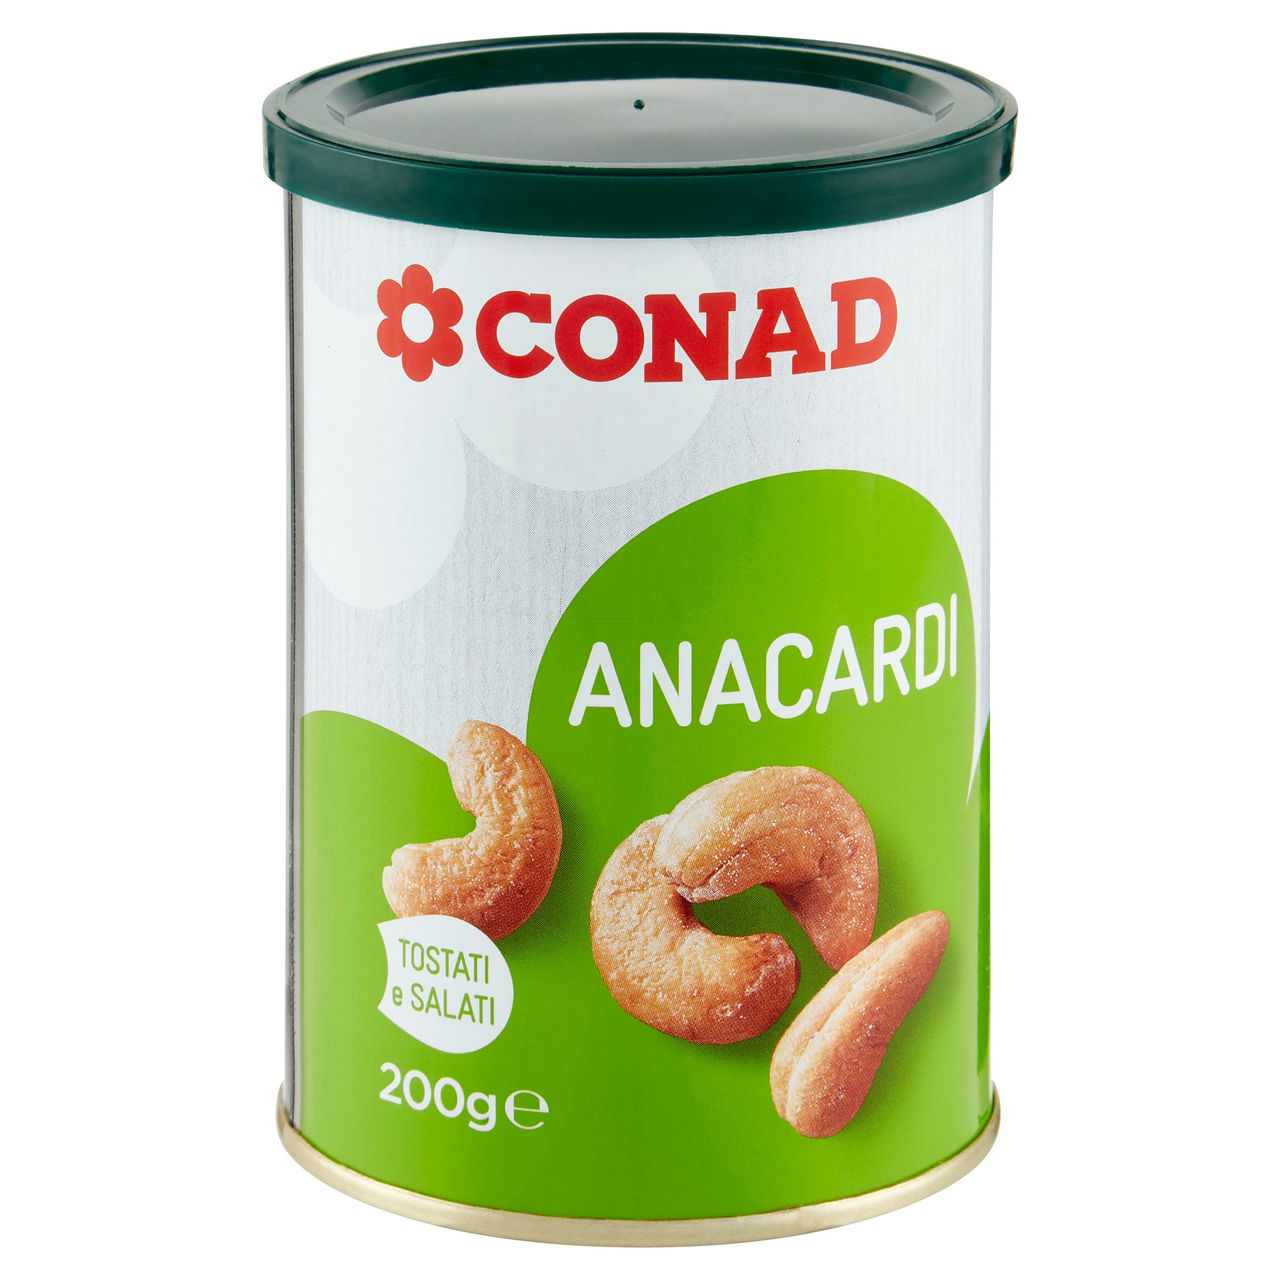 Anacardi Tostati e Salati Conad in vendita online